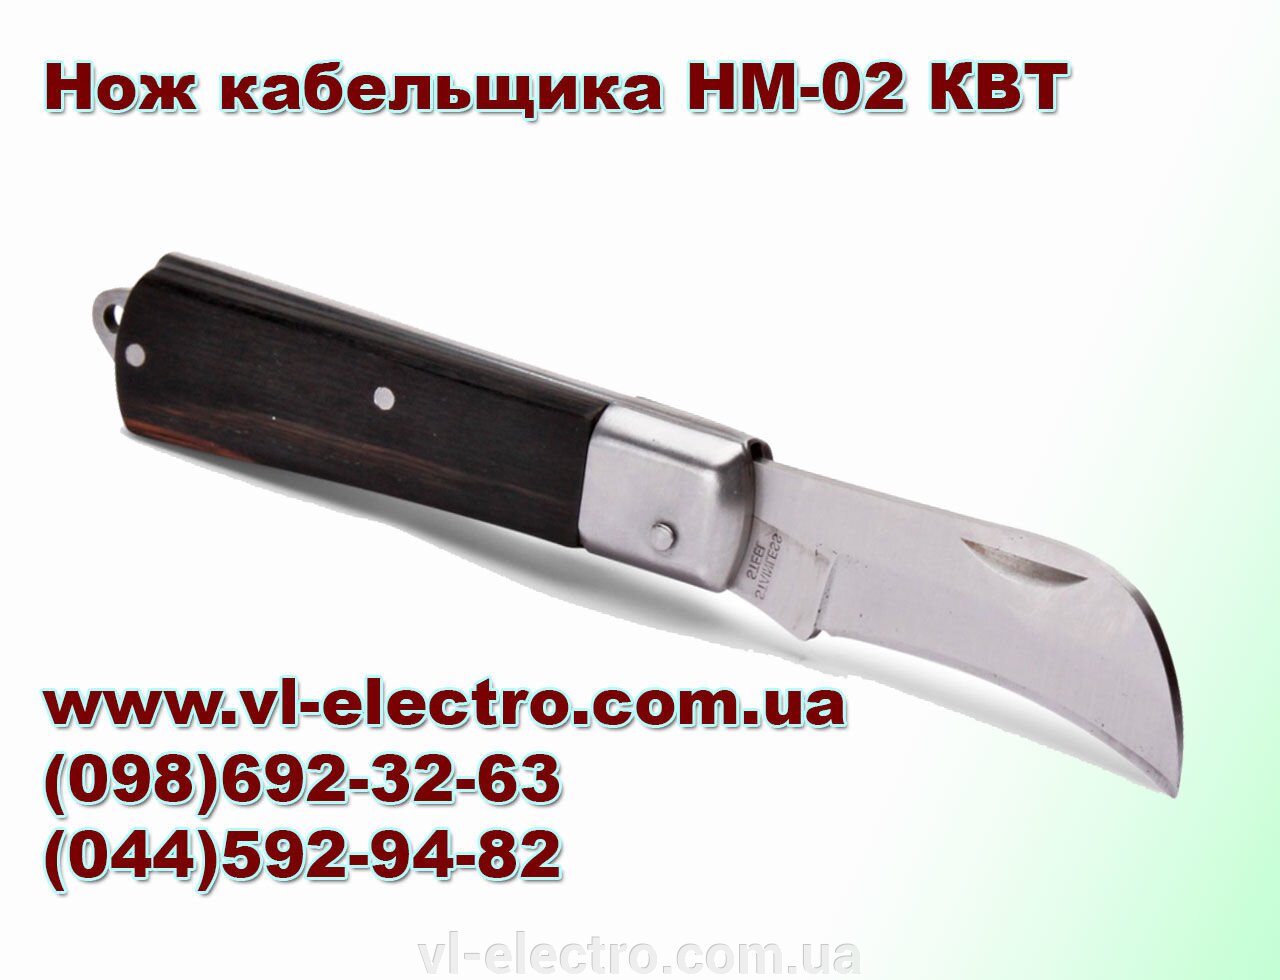 нож монтерский НМ-02